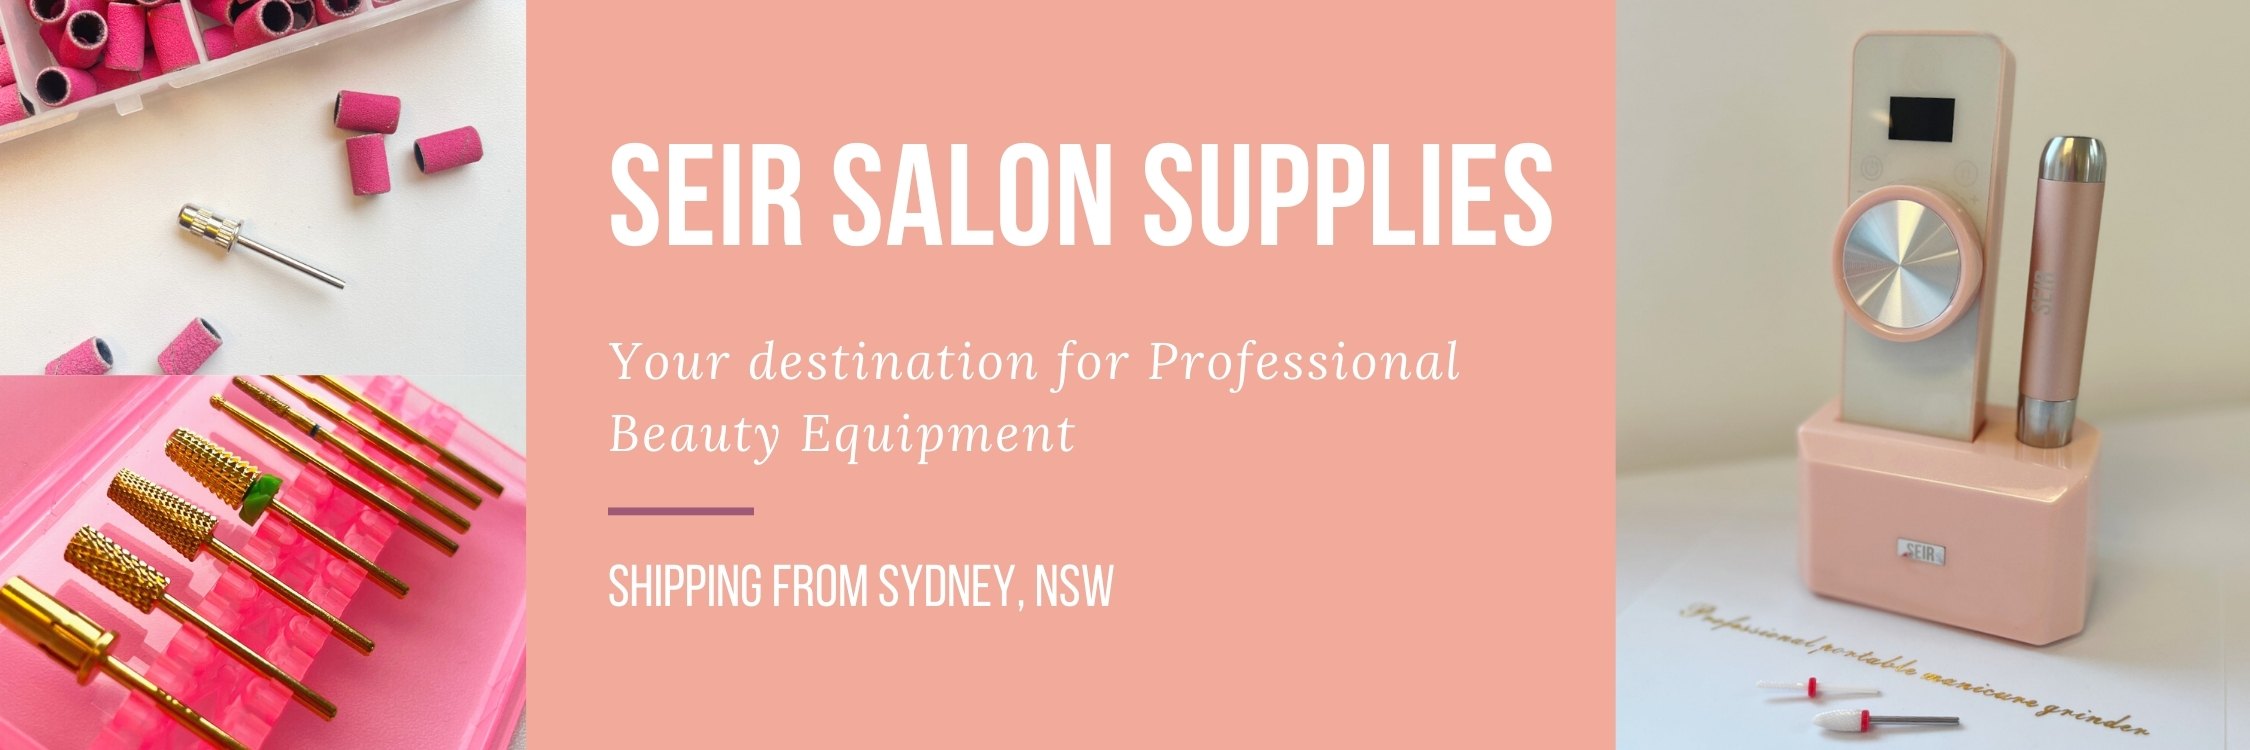 seir salon supplies for beauty